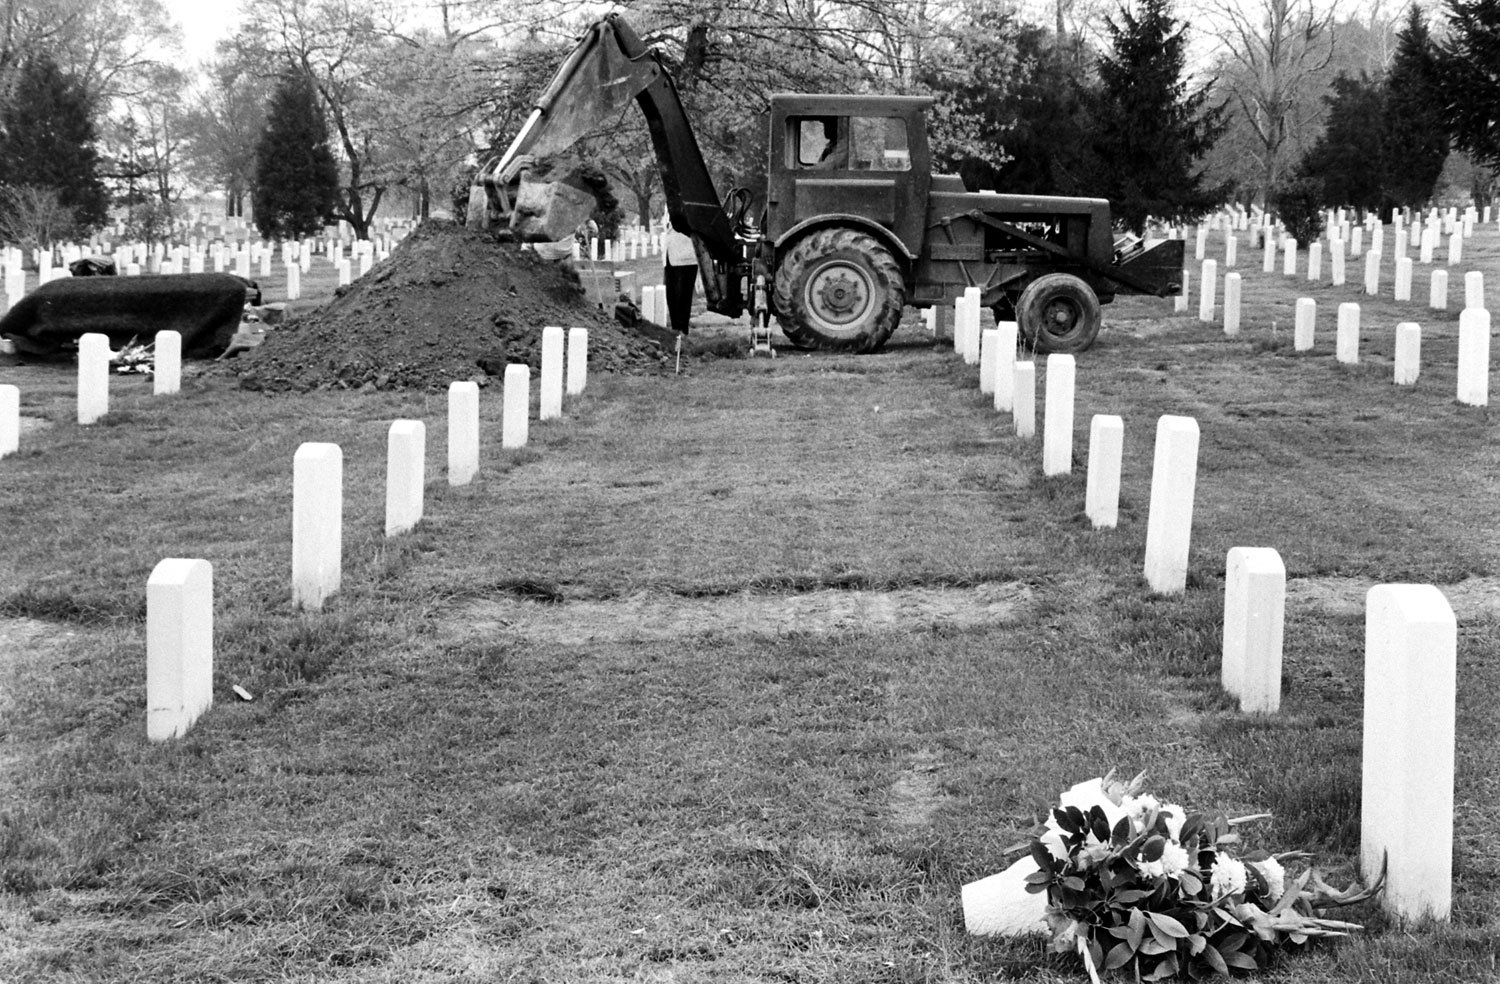 Digging a grave, Arlington National Cemetery, 1965.